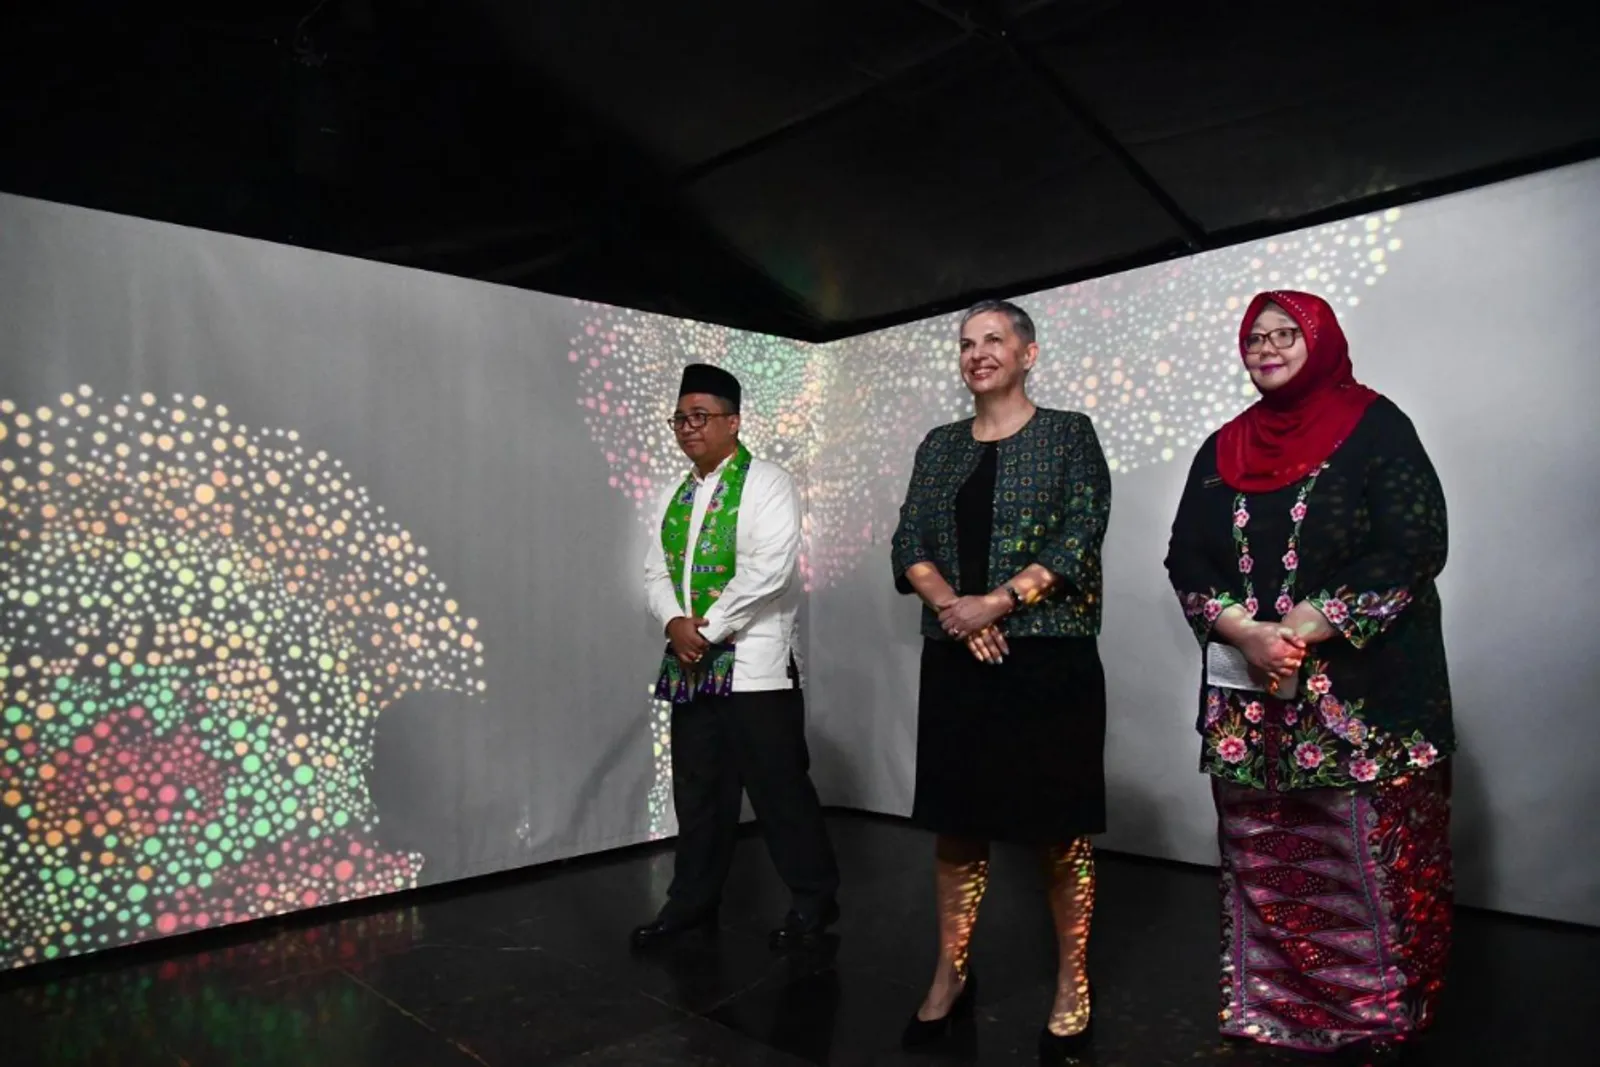 Rayakan NAIDOC, Pameran Seni Australia Hadir di Jakarta